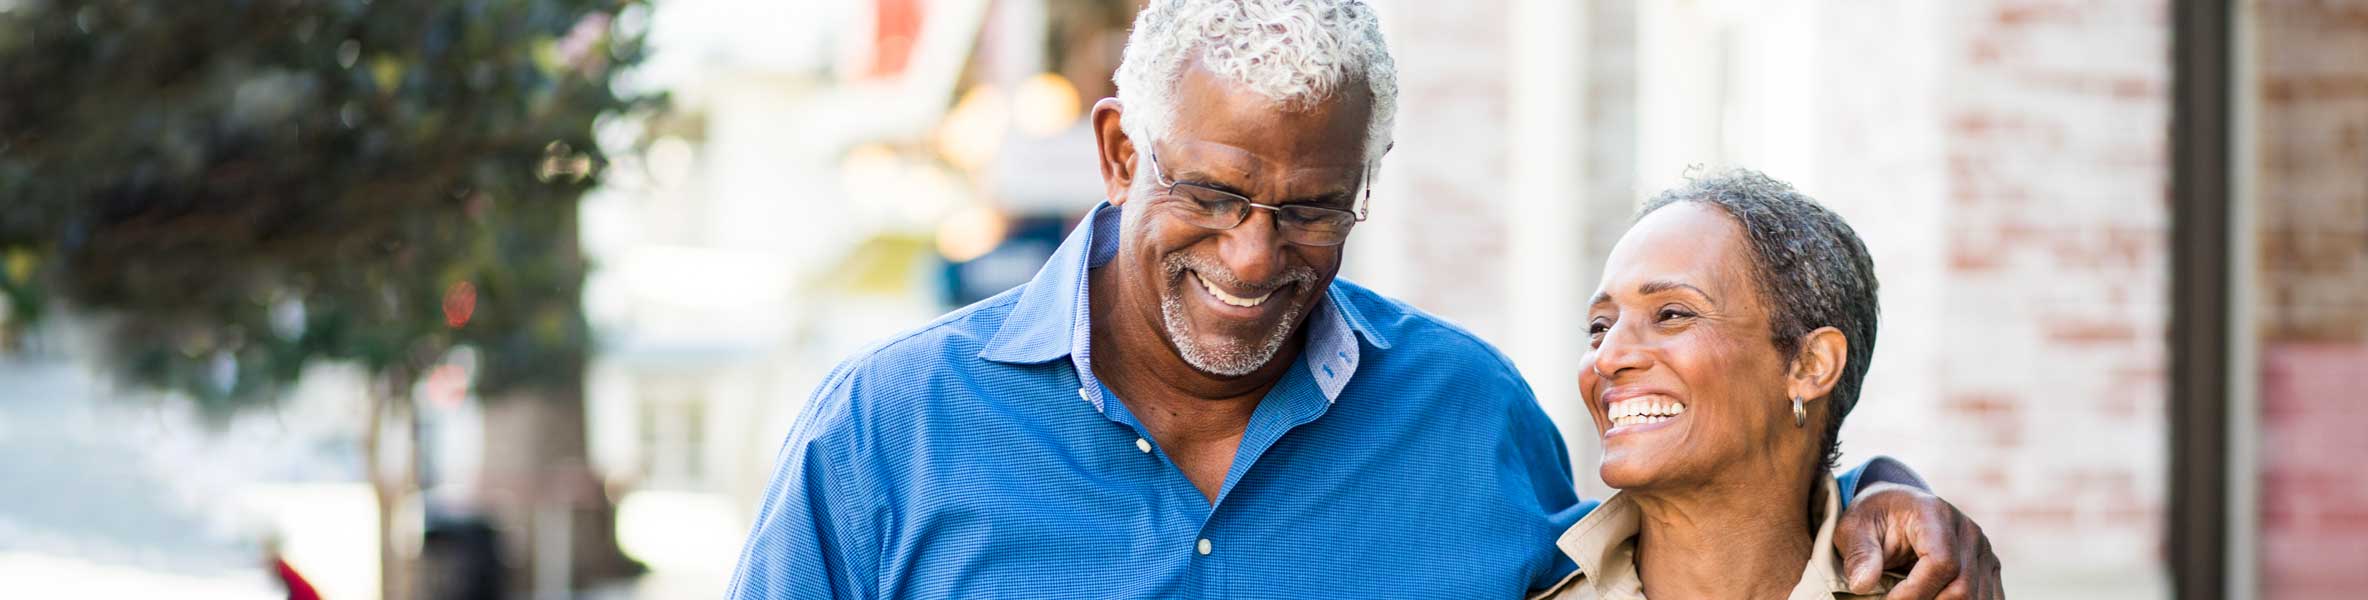 hero retirement risk study smart steps to address retirement Risks for people of color